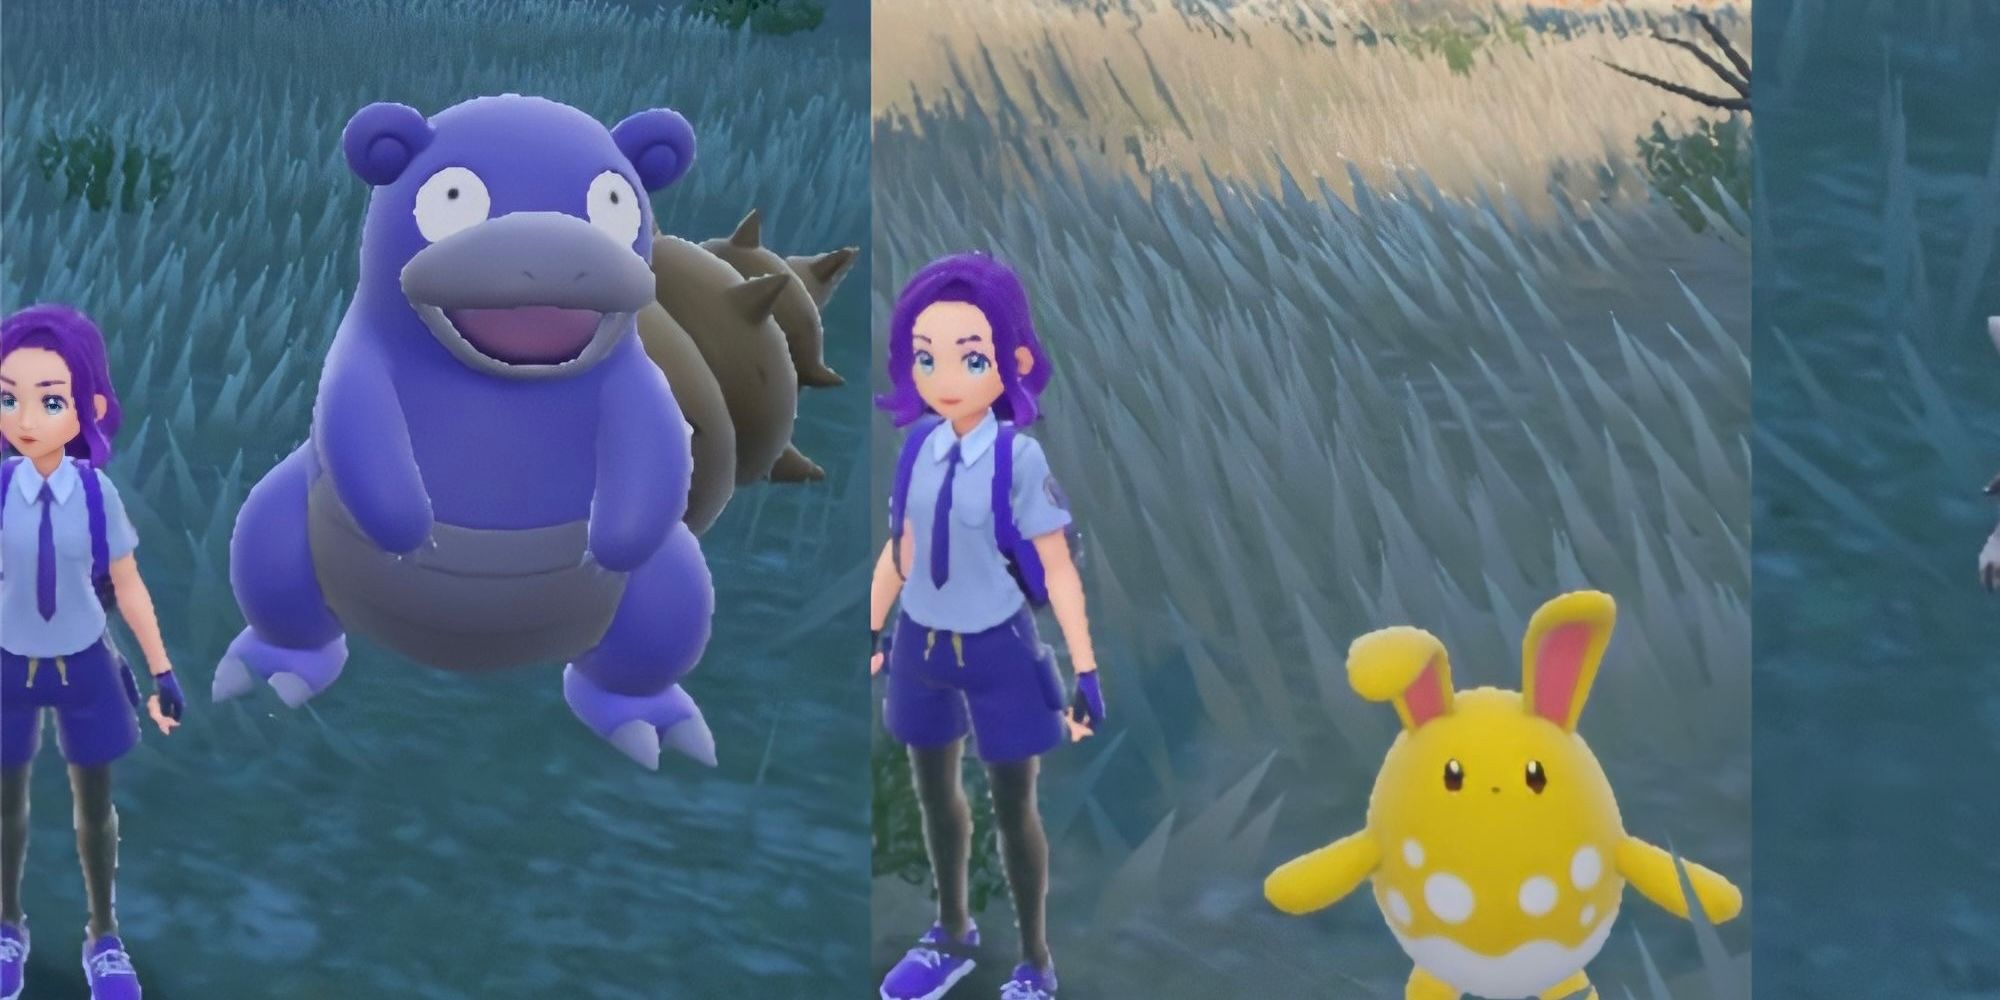 Pokémon Scarlet and Violet  Easiest Shiny Hunts for Beginners - KeenGamer